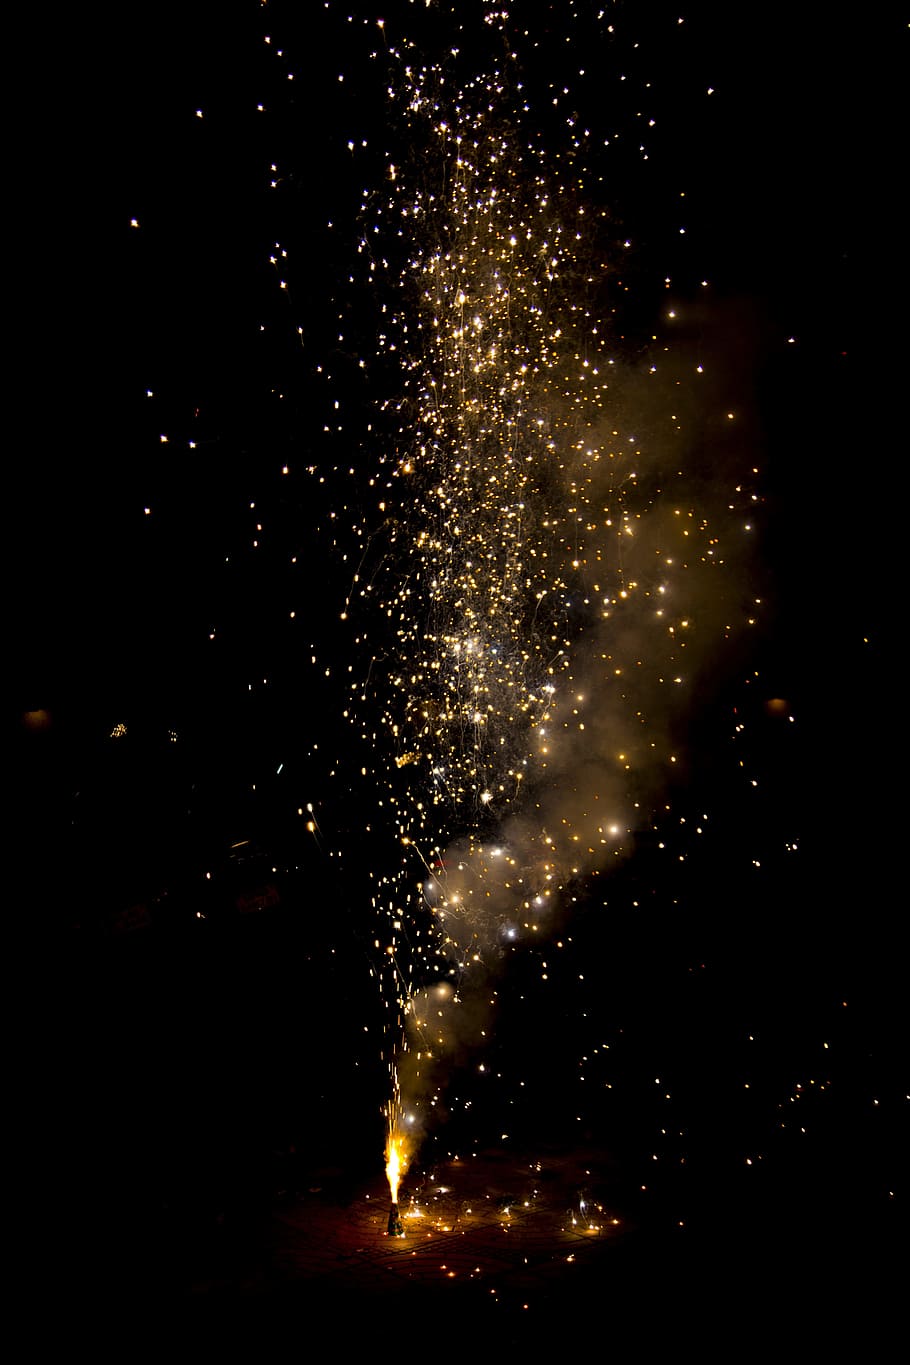 deepavali, diwali, firecrackers, festival, indian, night, firework display, illuminated, firework, exploding